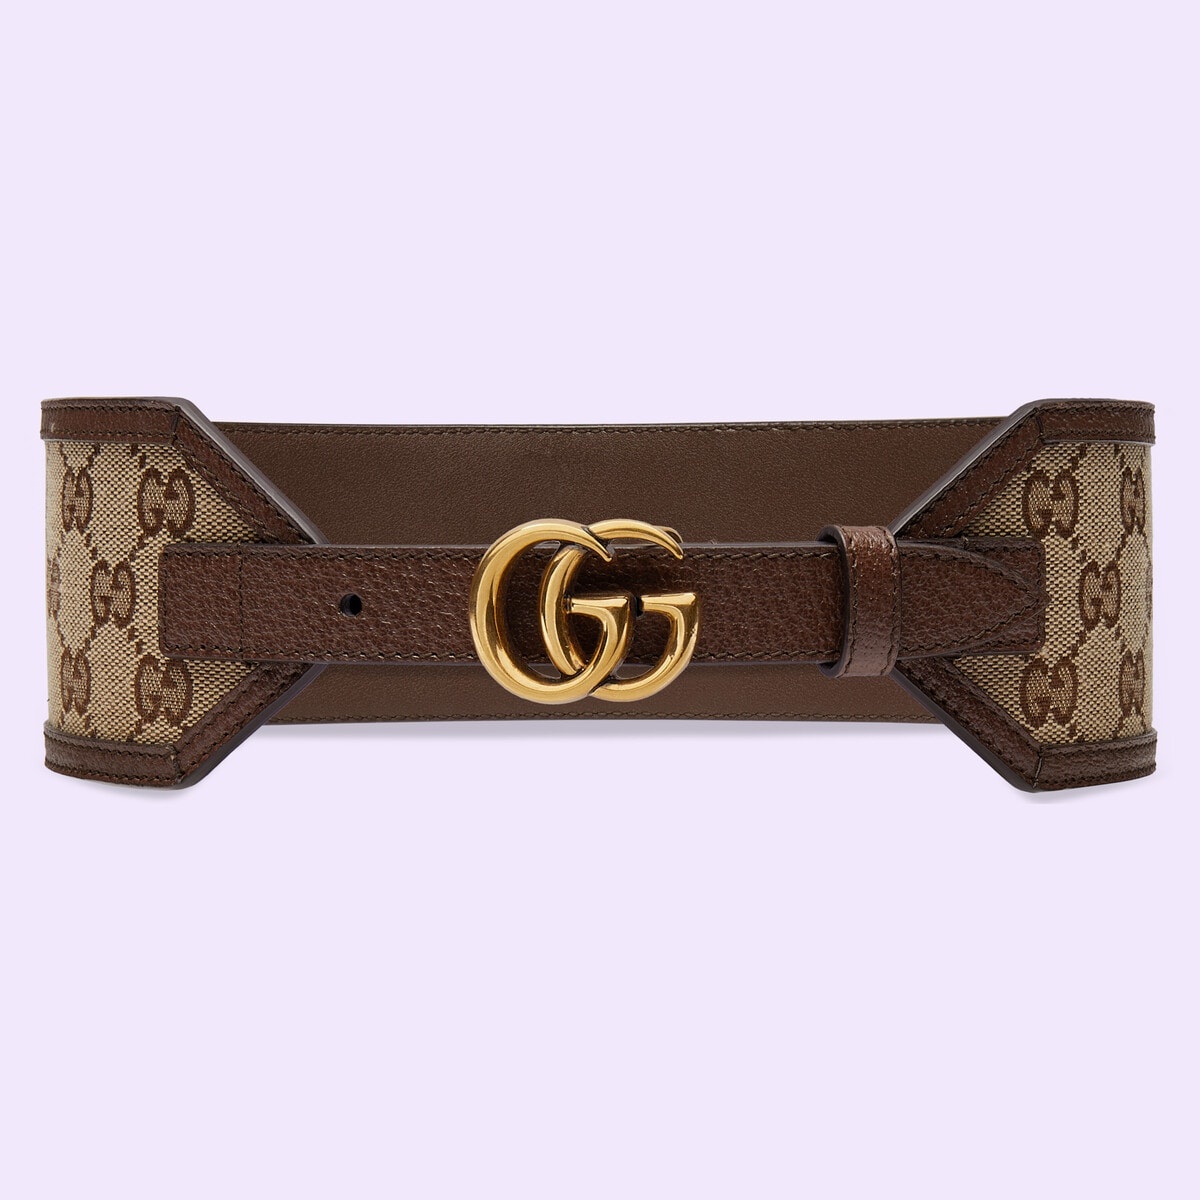 GG Marmont wide belt - 1